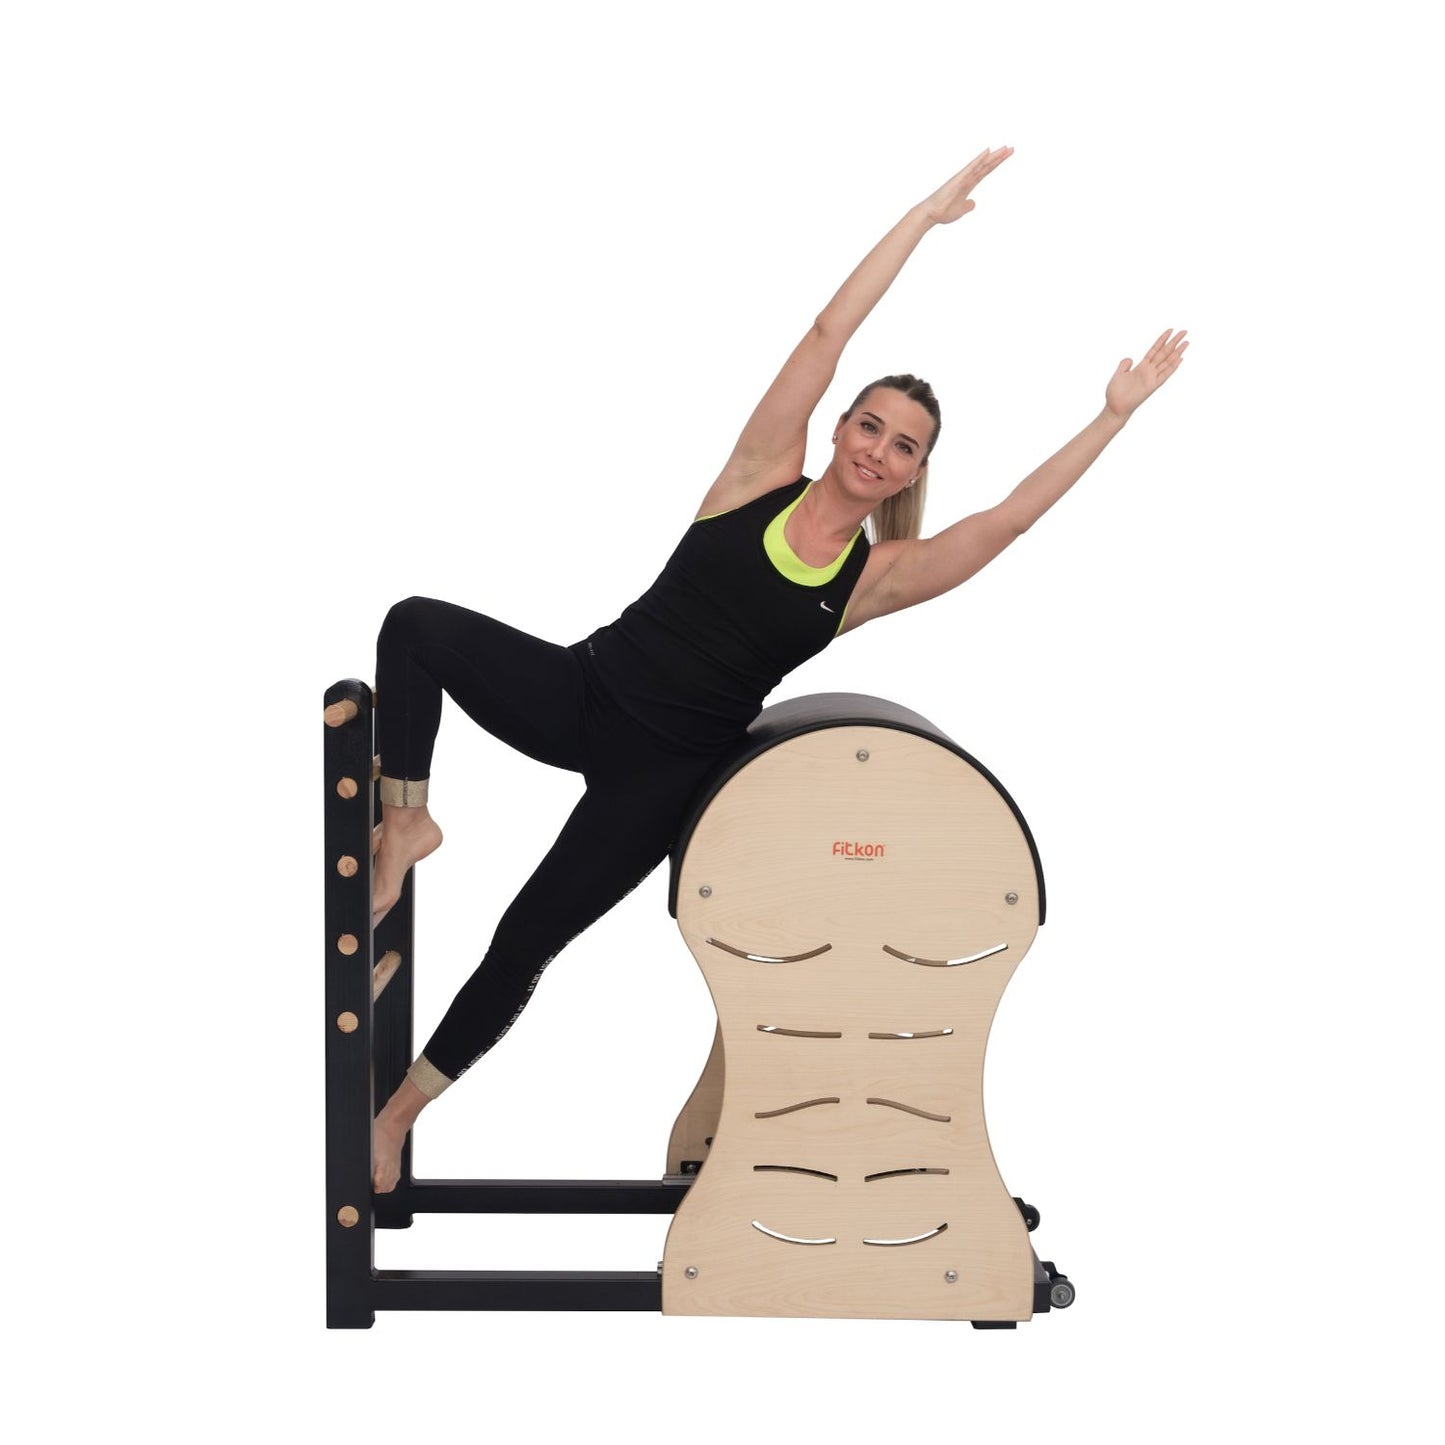 The Pilates Ladder Barrel — Lauren Hilton Pilates